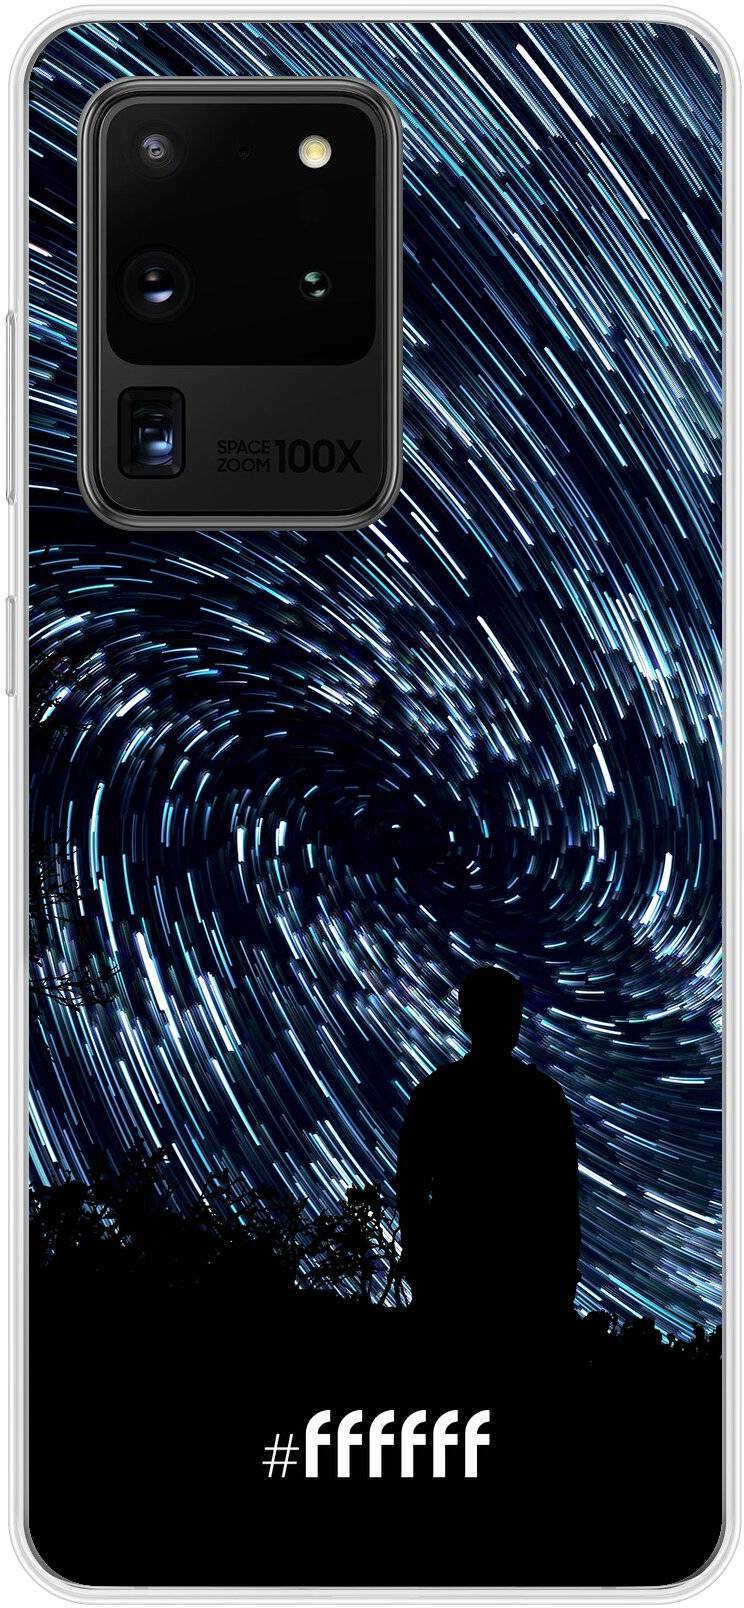 Starry Circles Galaxy S20 Ultra